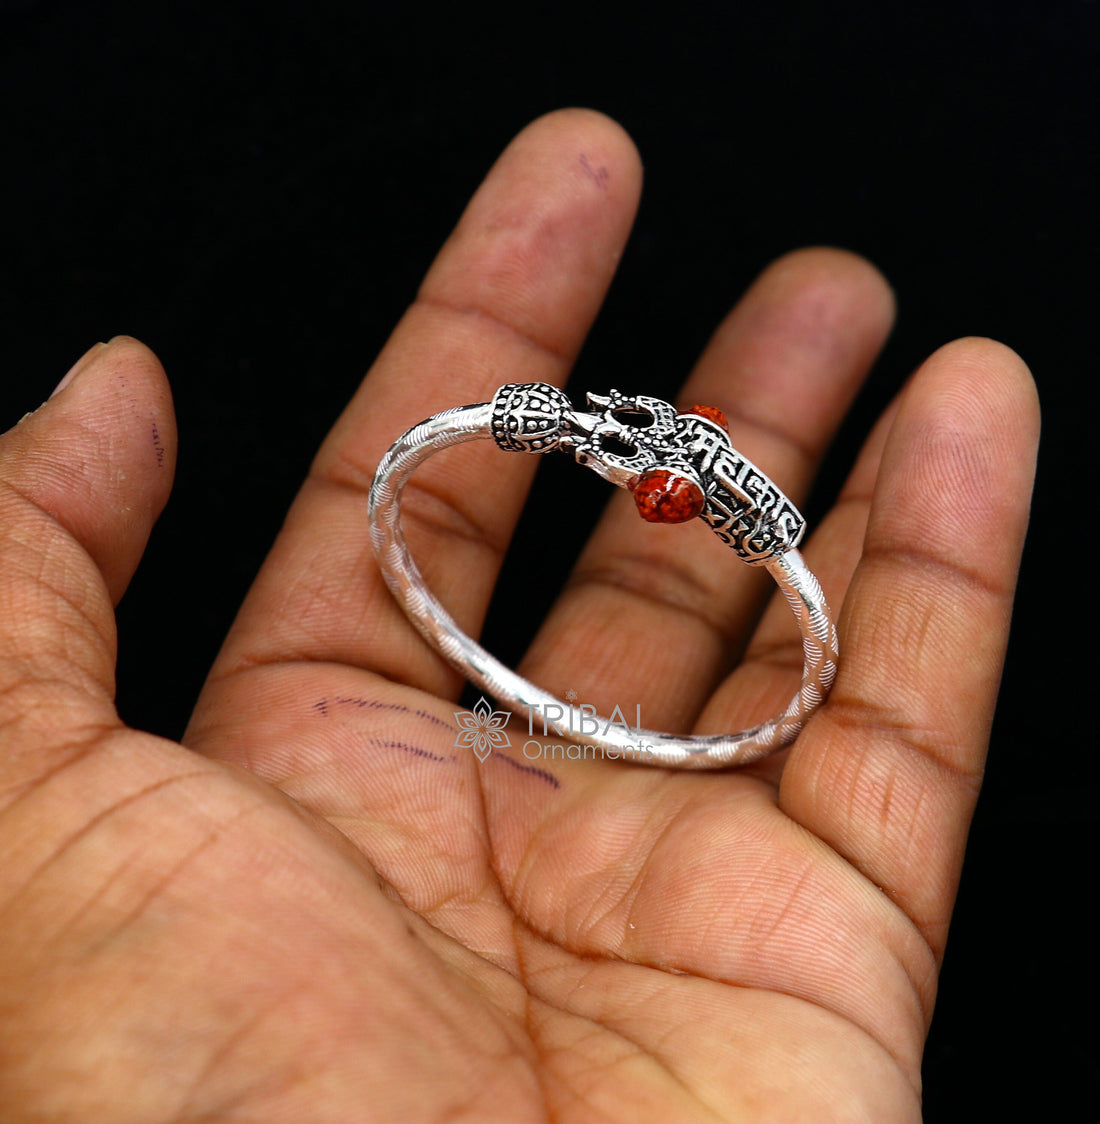 925 sterling silver Handmade gorgeous Lord shiva trident baby bangle bracelet kada, amazing Shiv kada unisex bracelet tribal jewelry nsk683 - TRIBAL ORNAMENTS